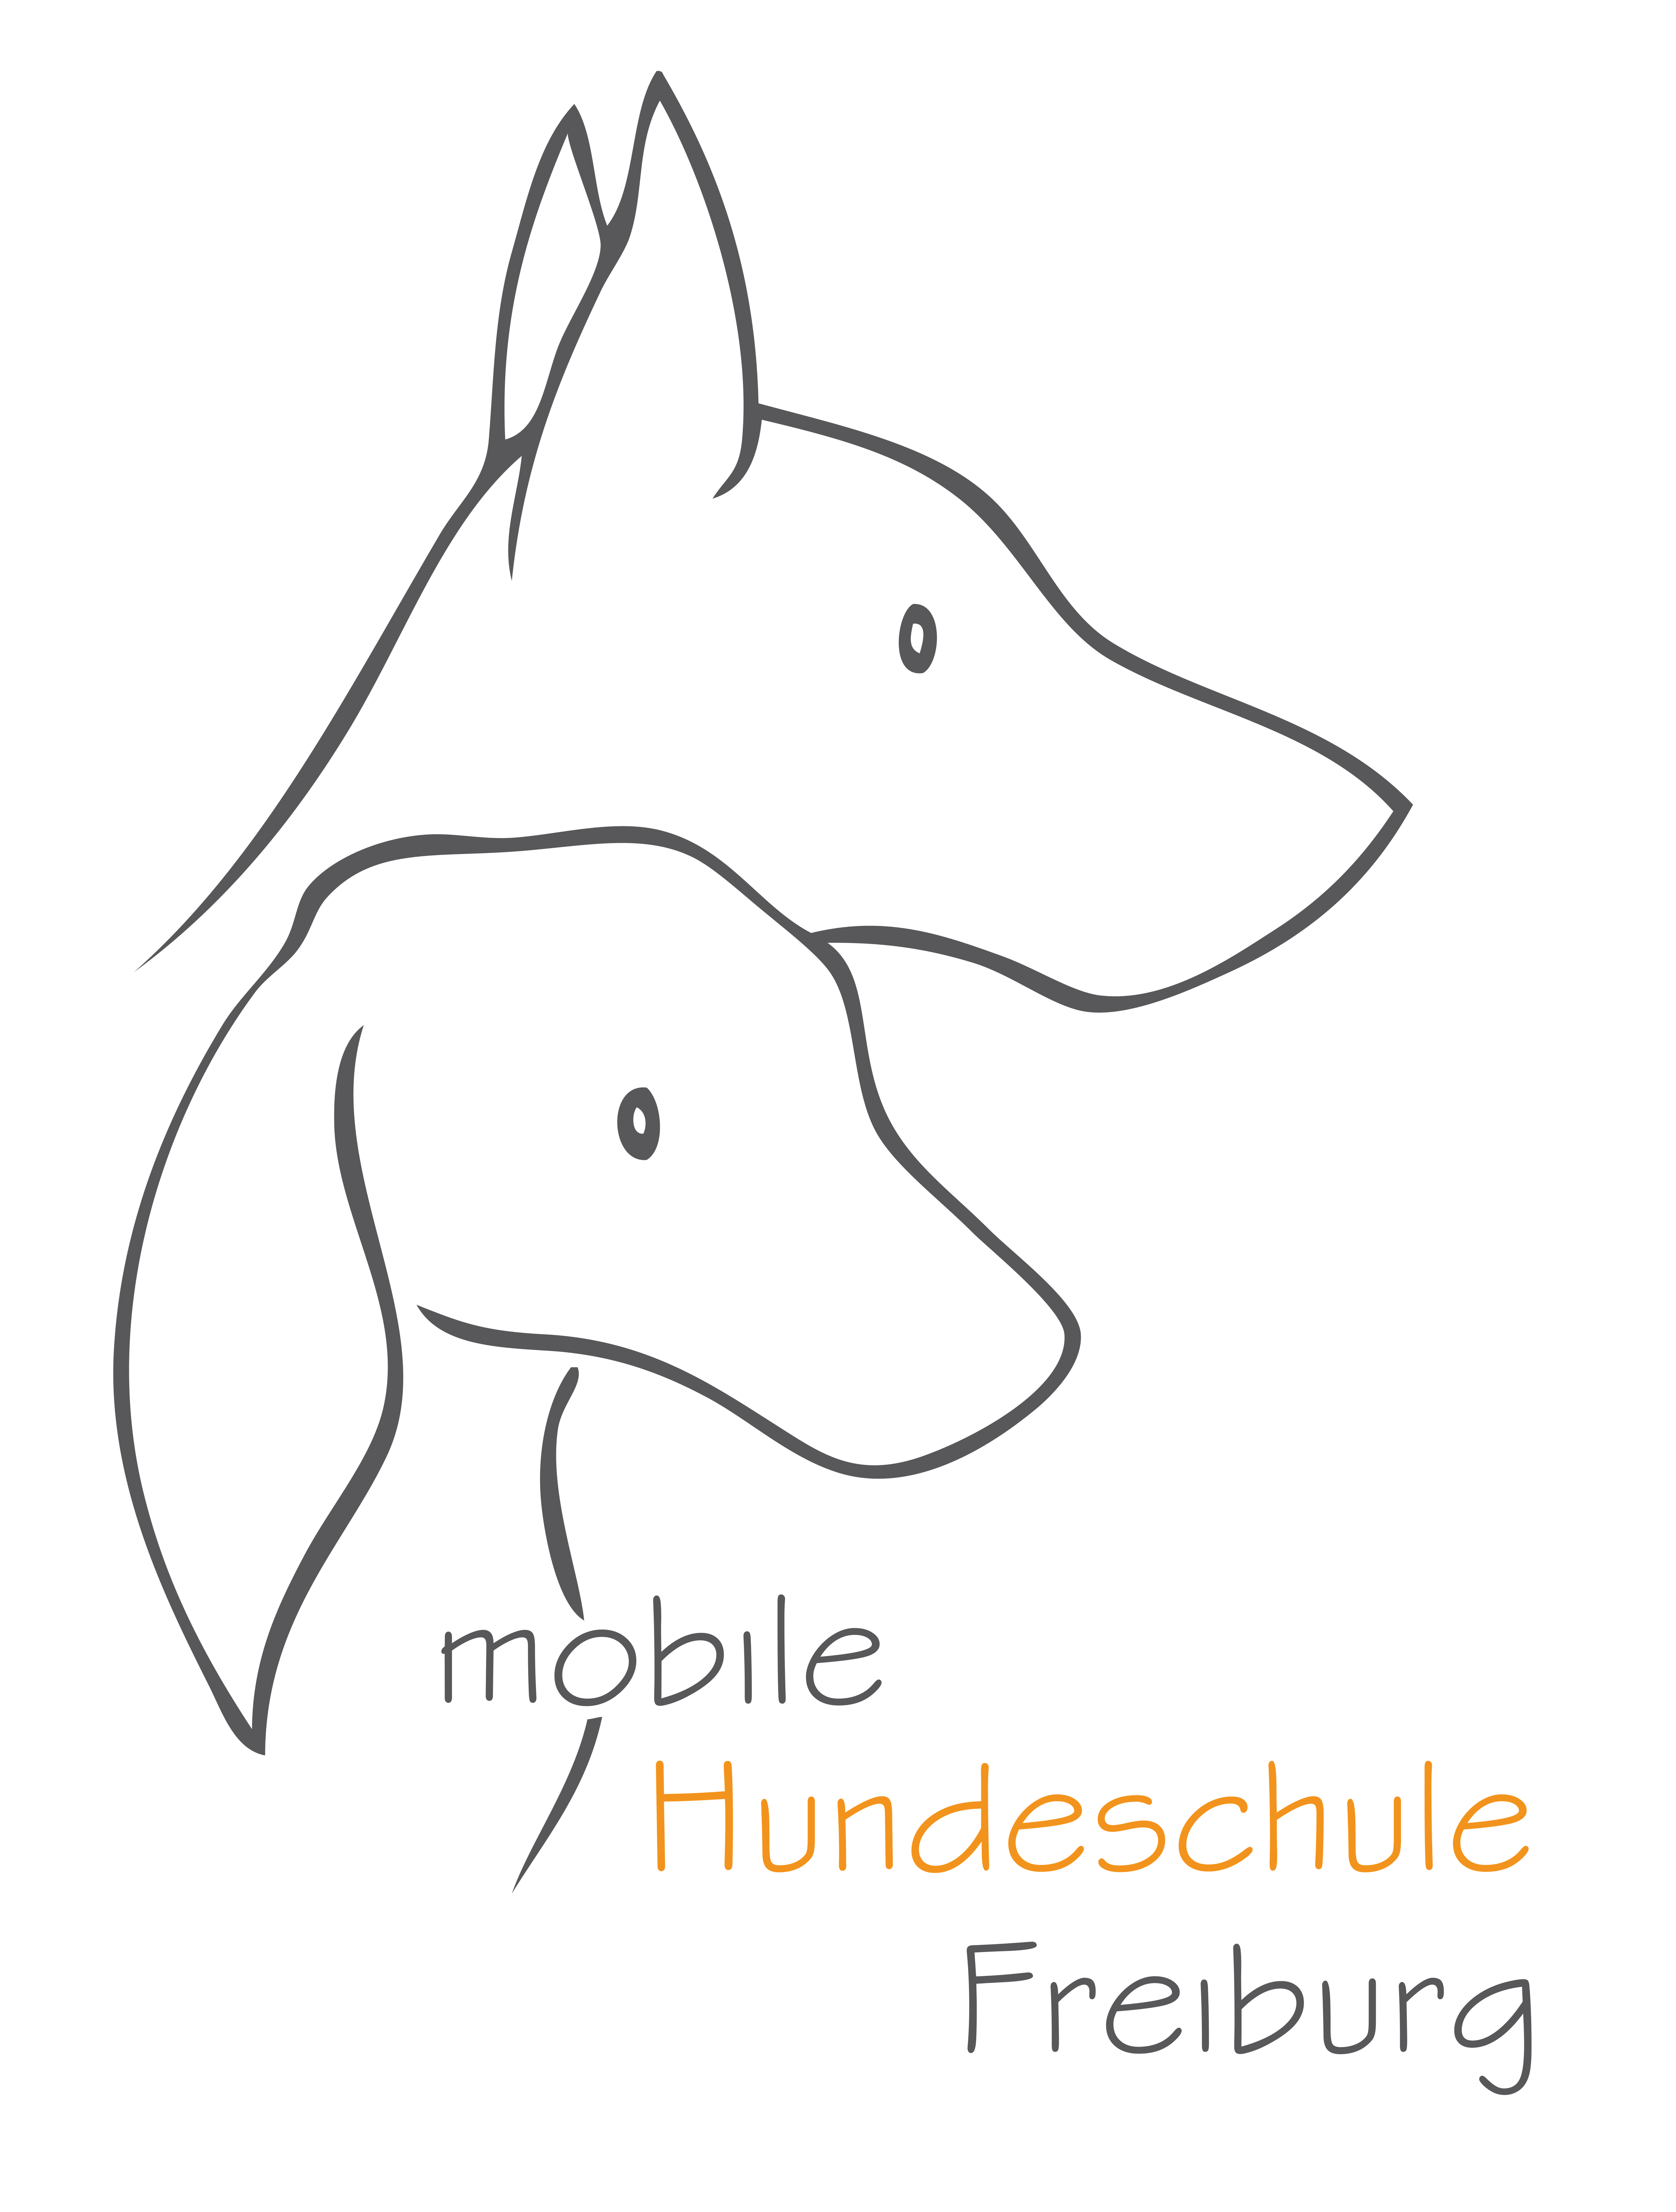 Mobile Hundeschule Freiburg